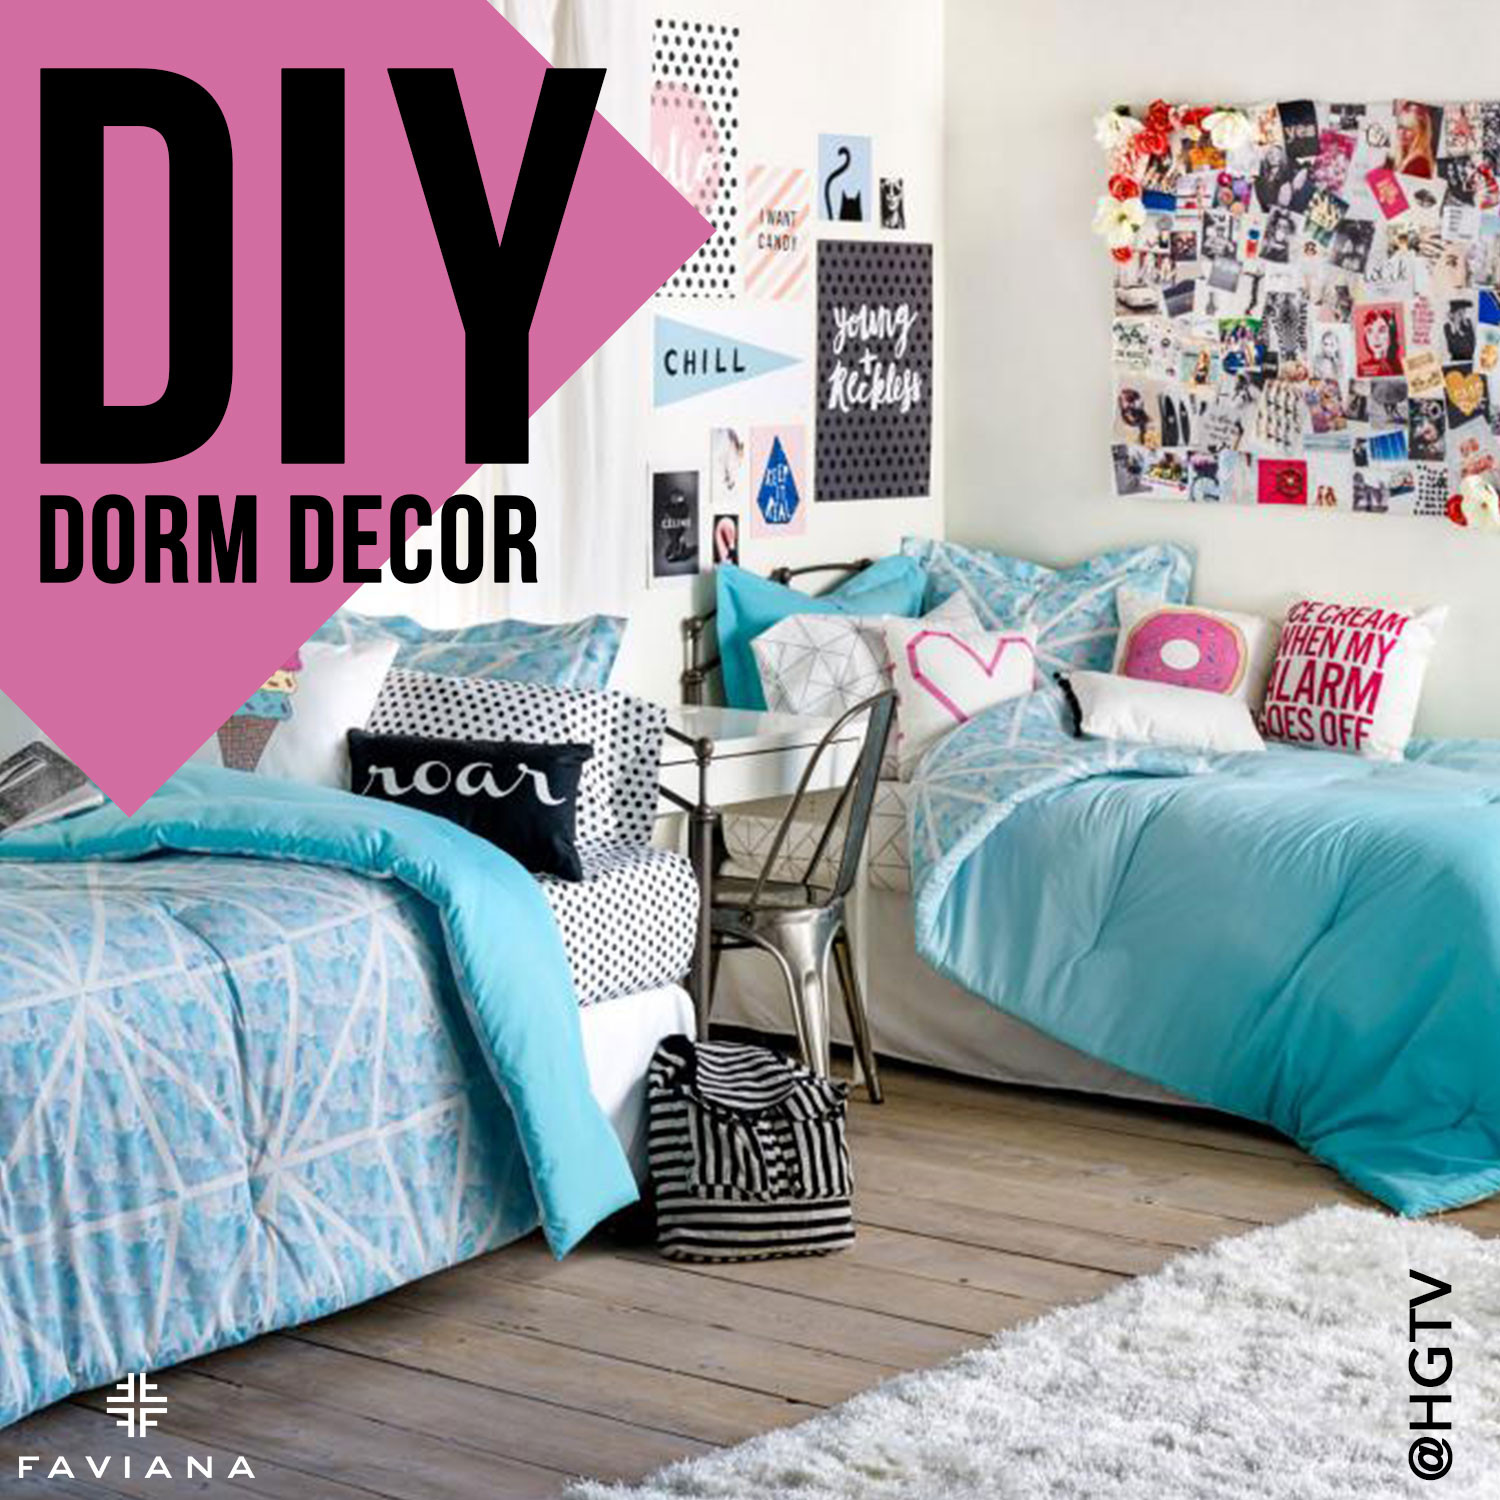 Best ideas about DIY Dorm Room Decorations
. Save or Pin DIY Dorm Decor Now.